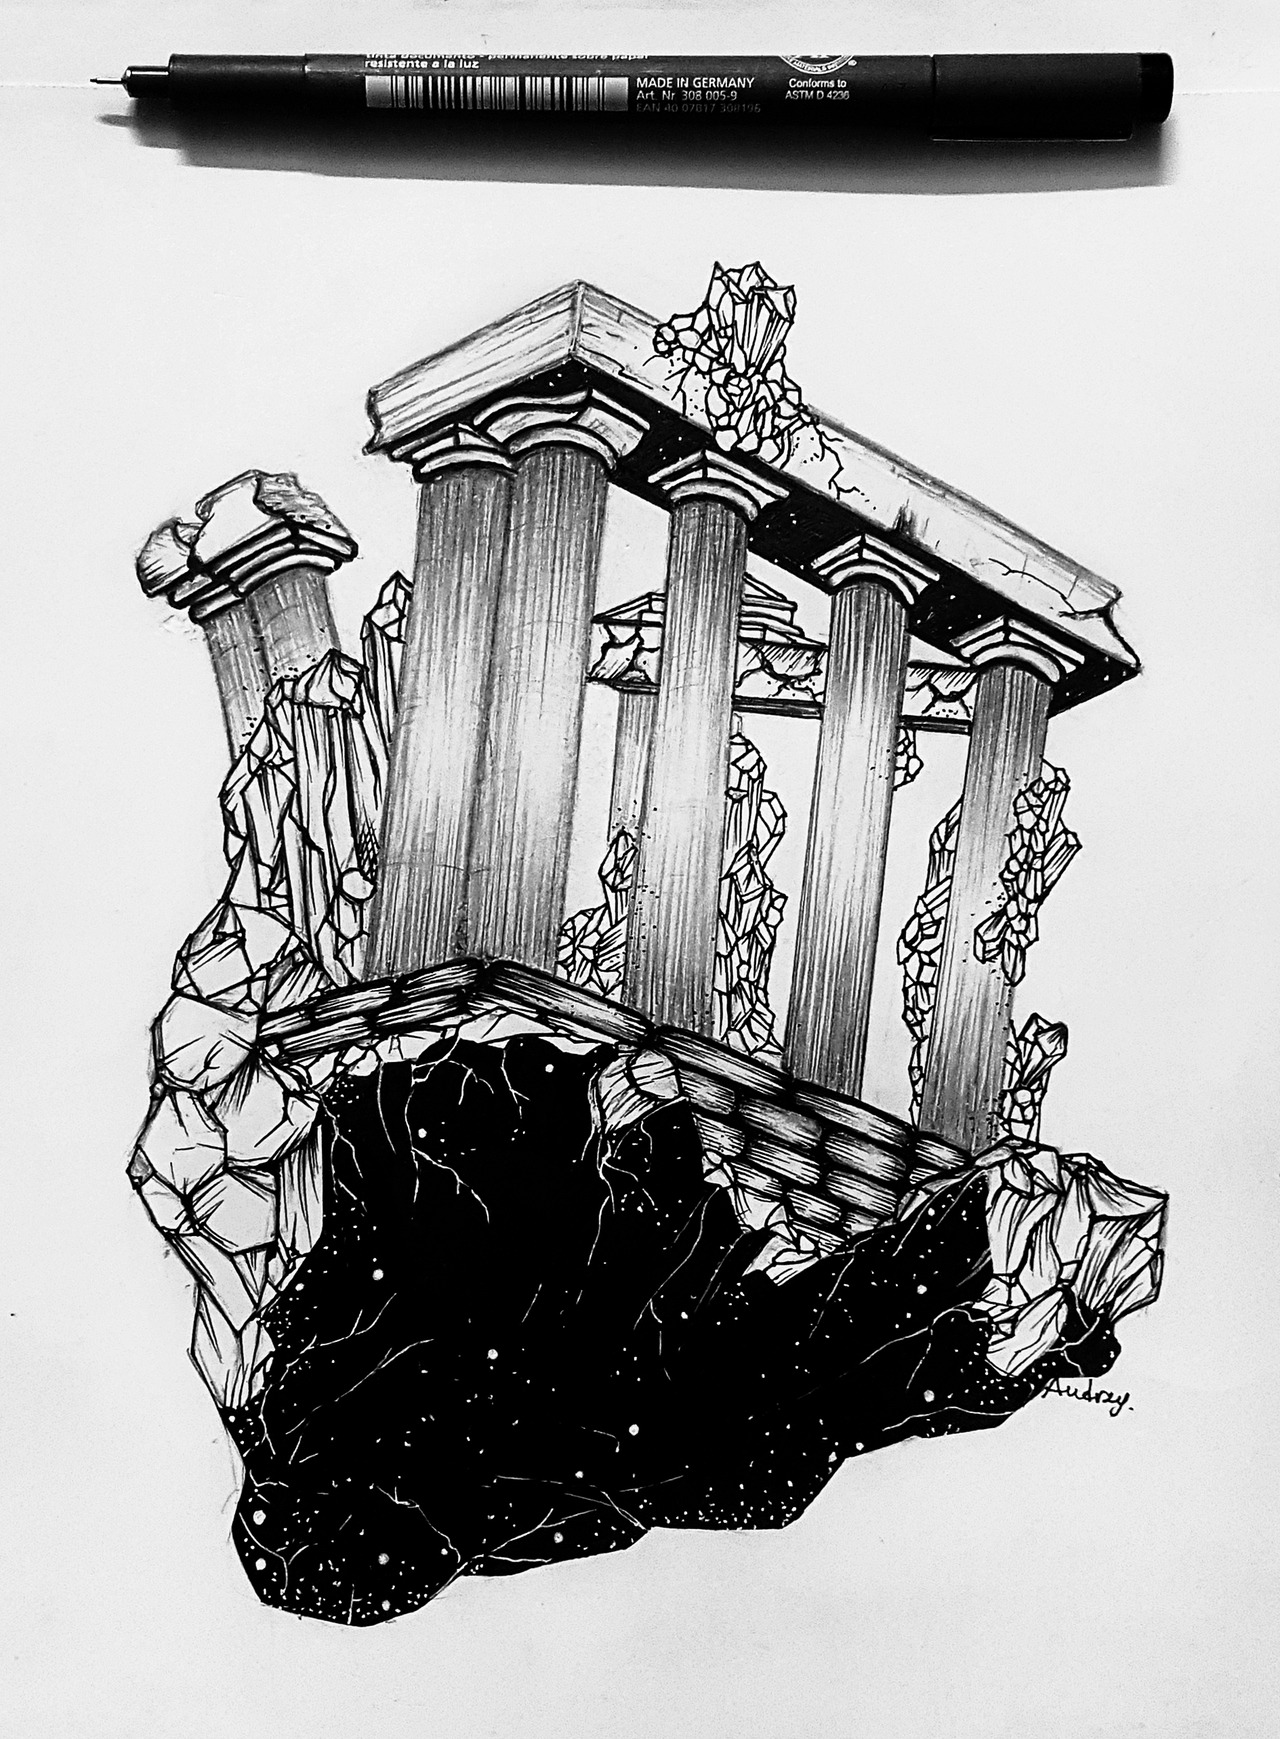 Parthenon http://doodlebugproject.tumblr.com/ https://www.instagram.com/audibug25/